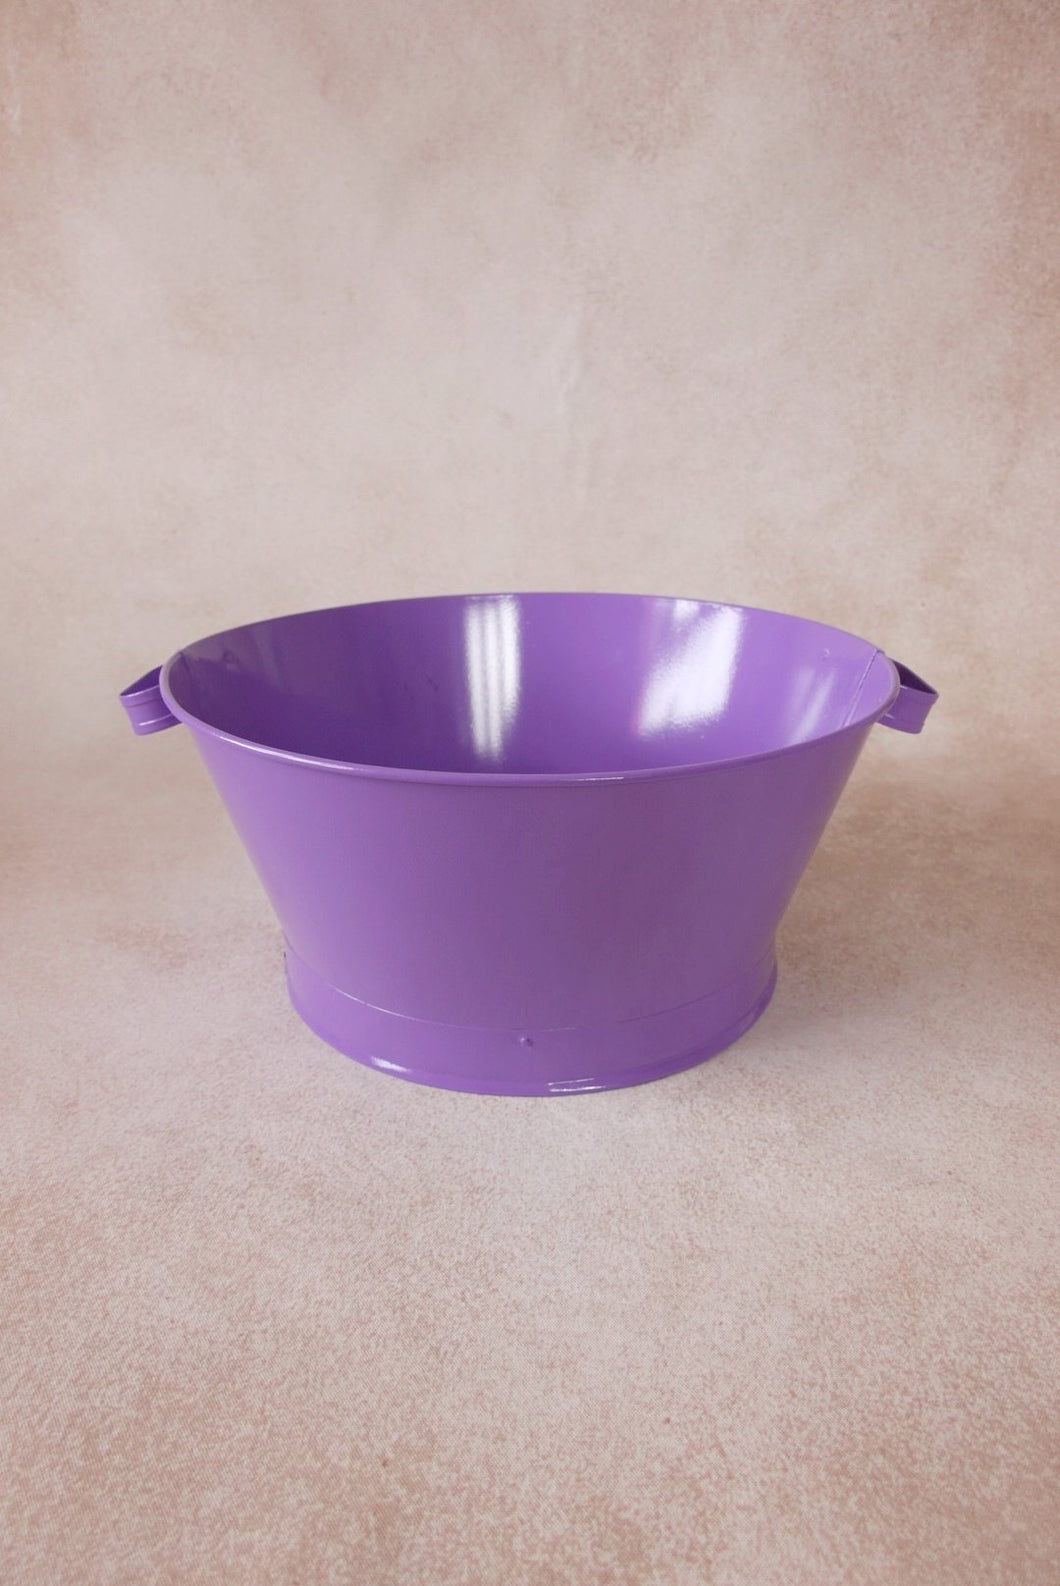 Purple Bath Tub